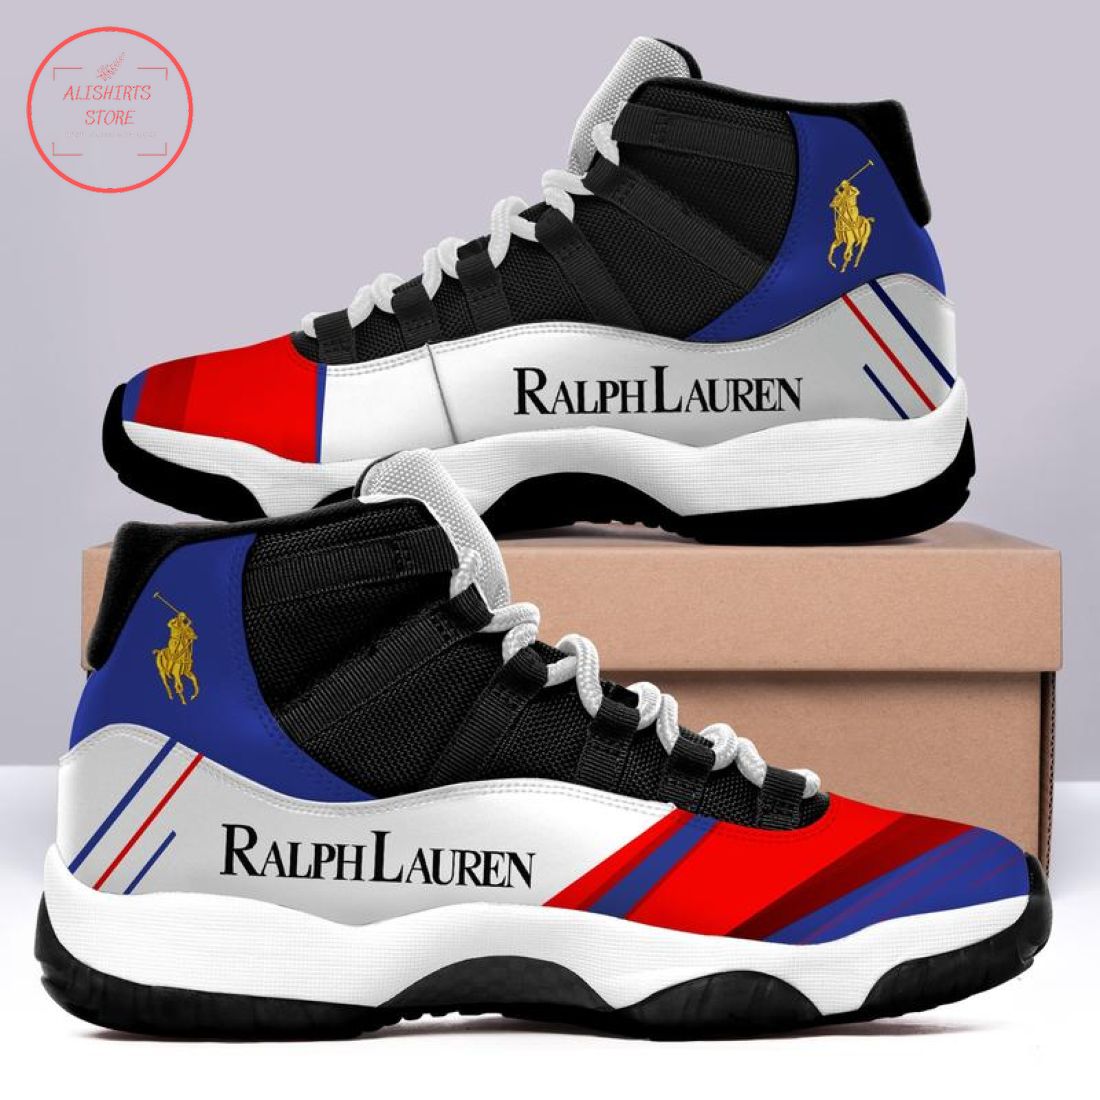 Ralph Lauren Air Jordan 11 Luxury Sneaker Shoes